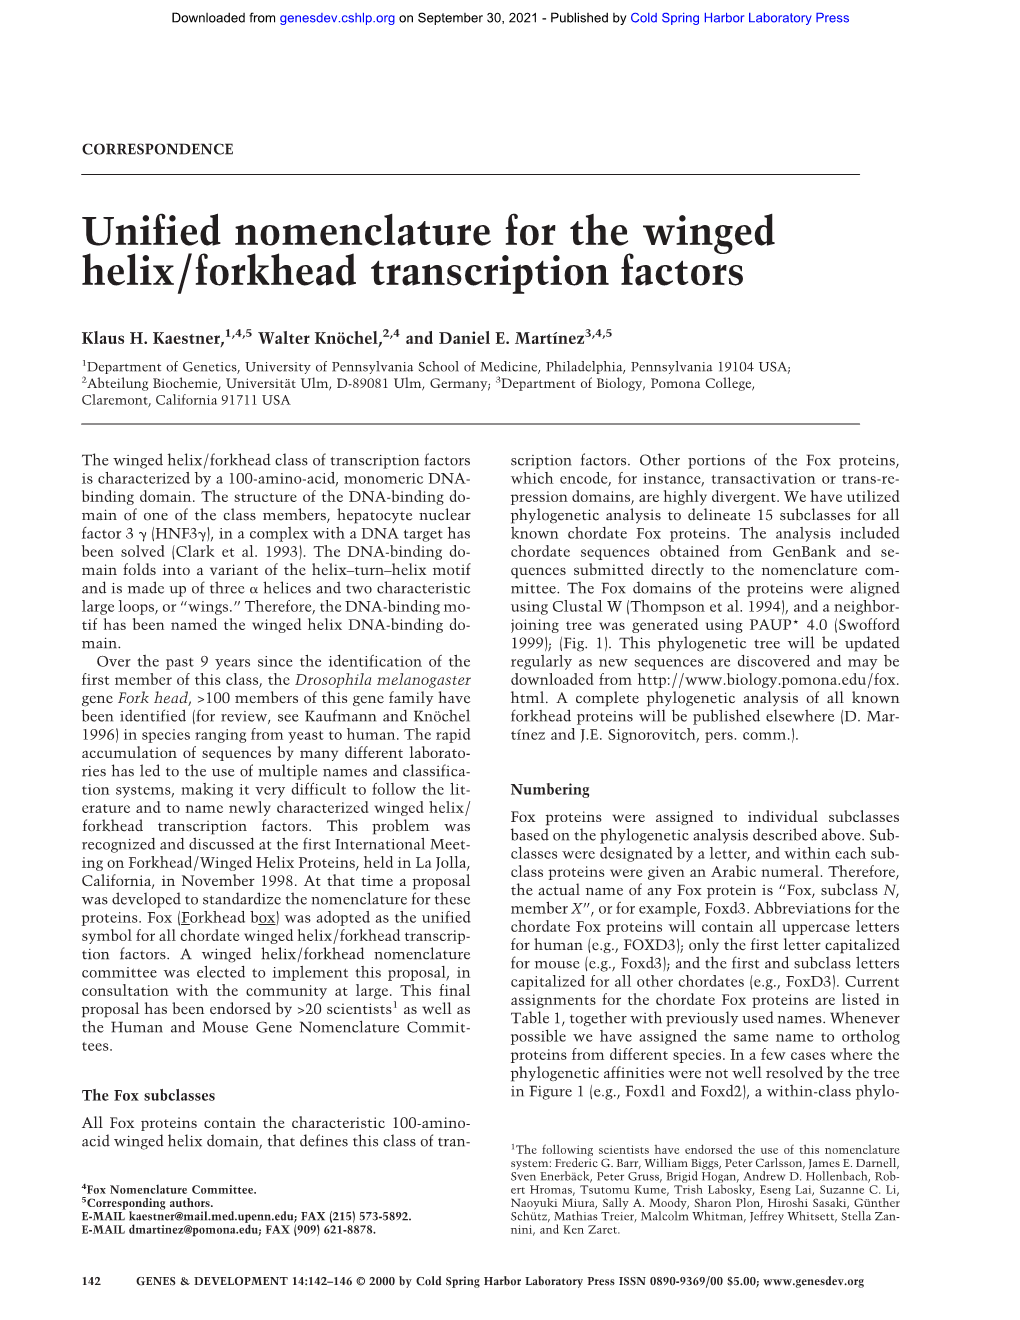 Unified Nomenclature for the Winged Helix/Forkhead Transcription Factors